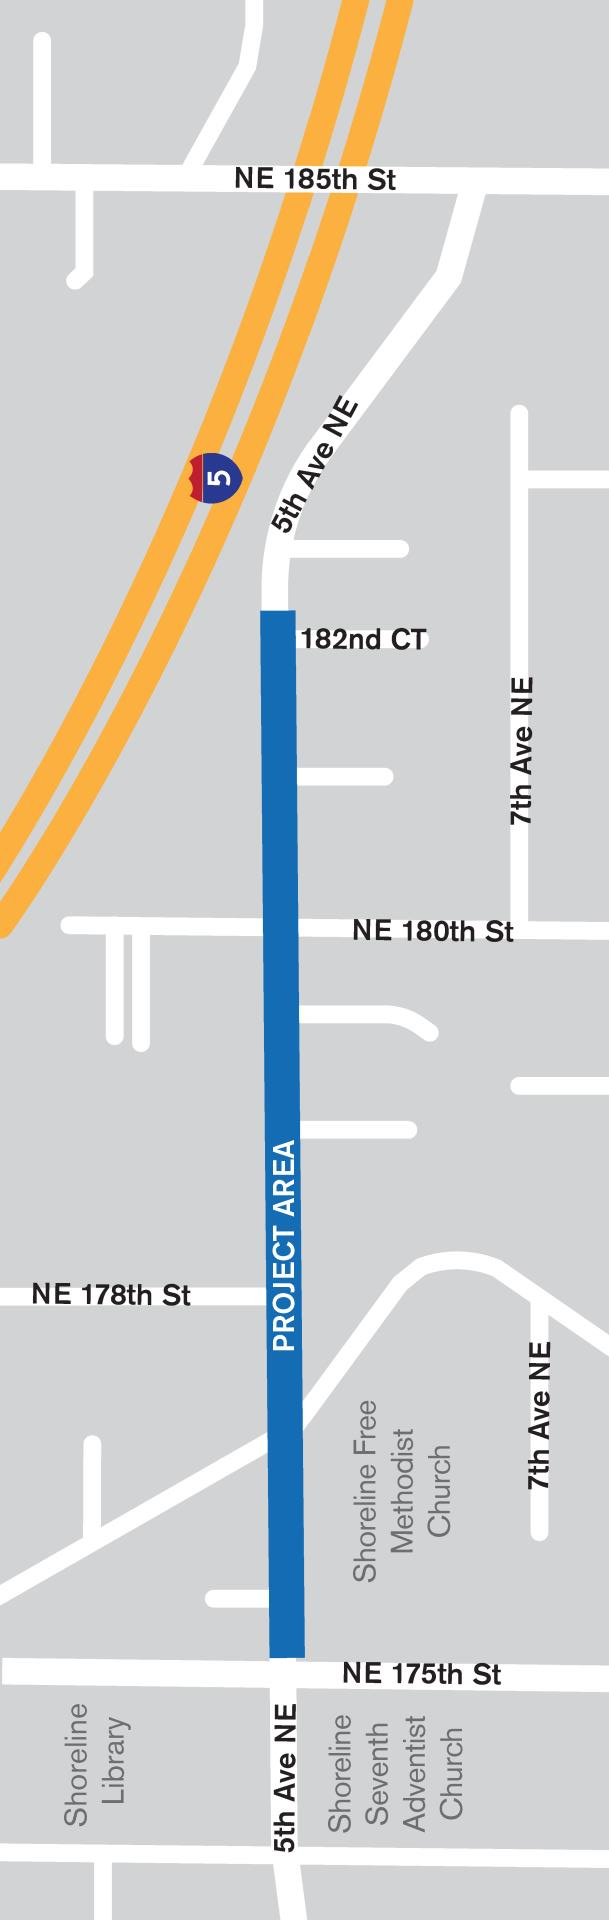 5th Ave NE Sidewalk Project Map